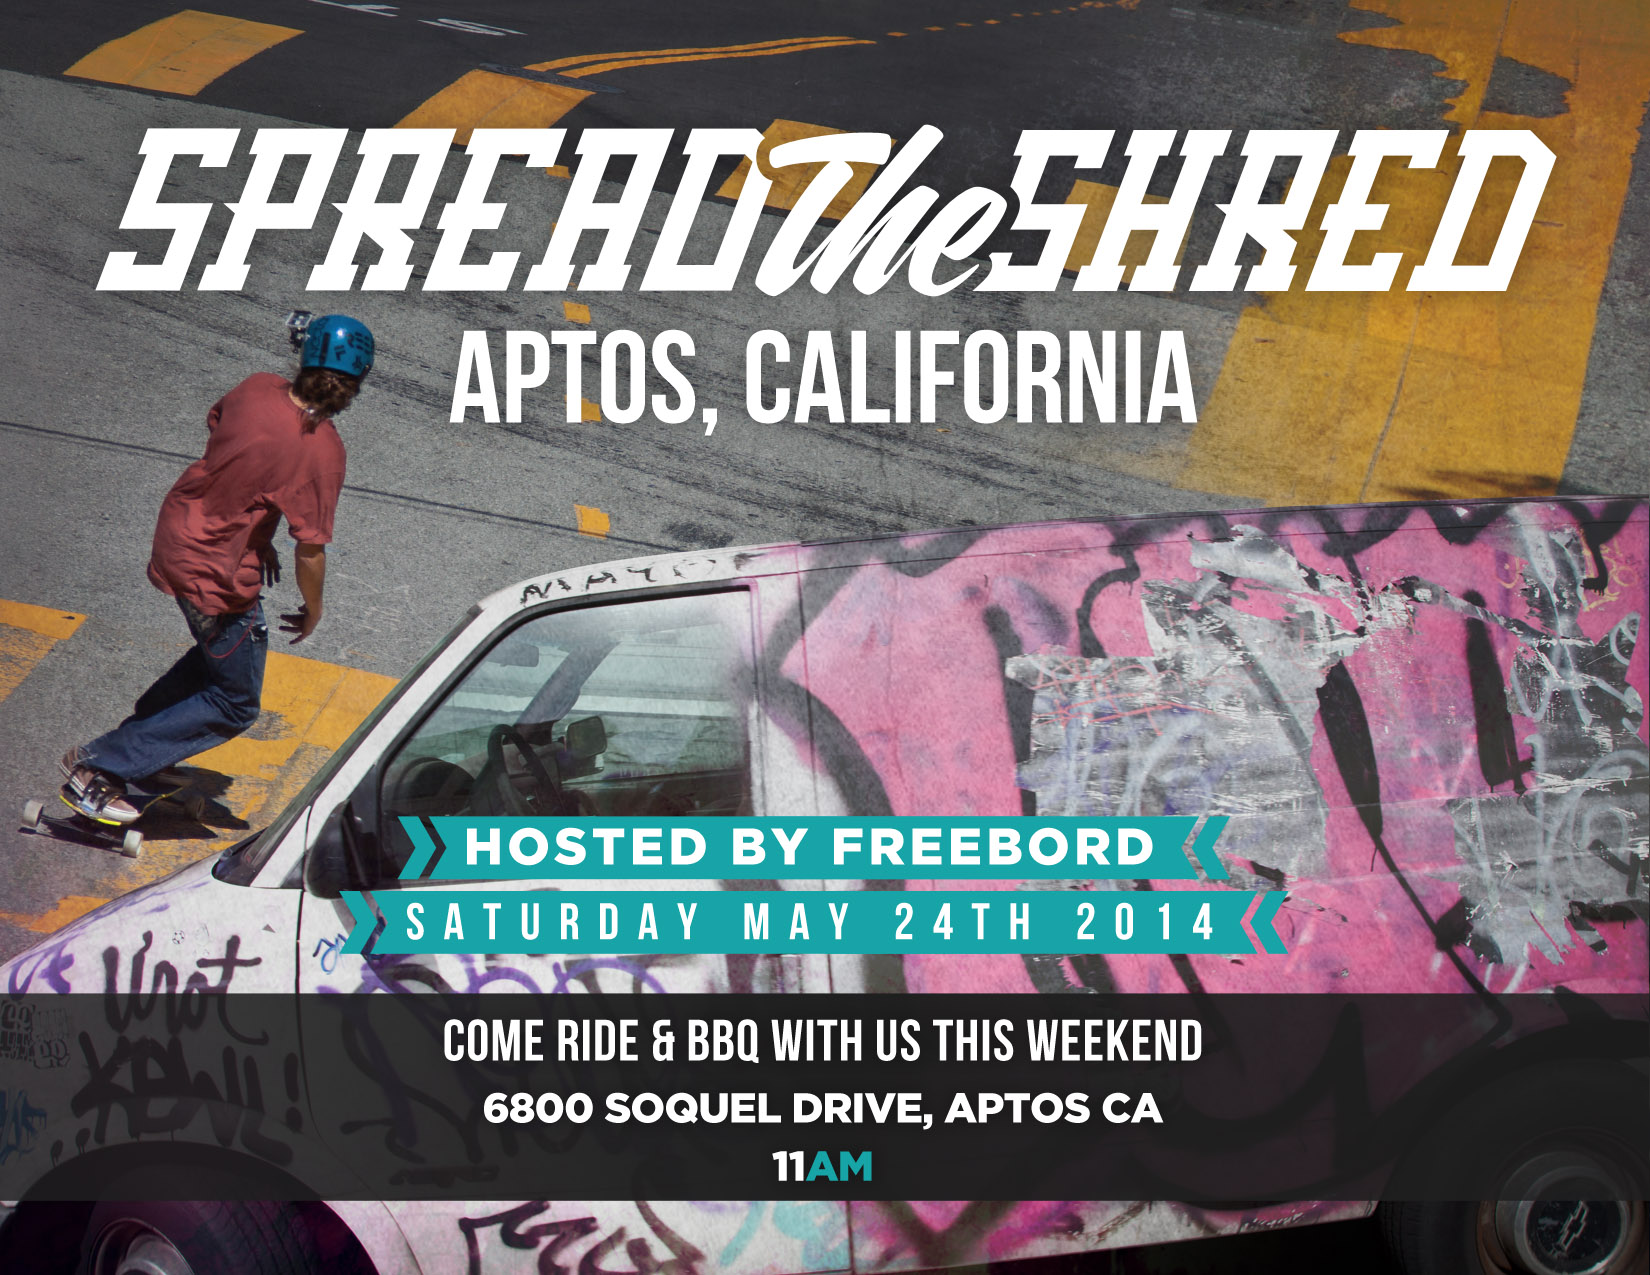 Spread the Shred – Aptos, California